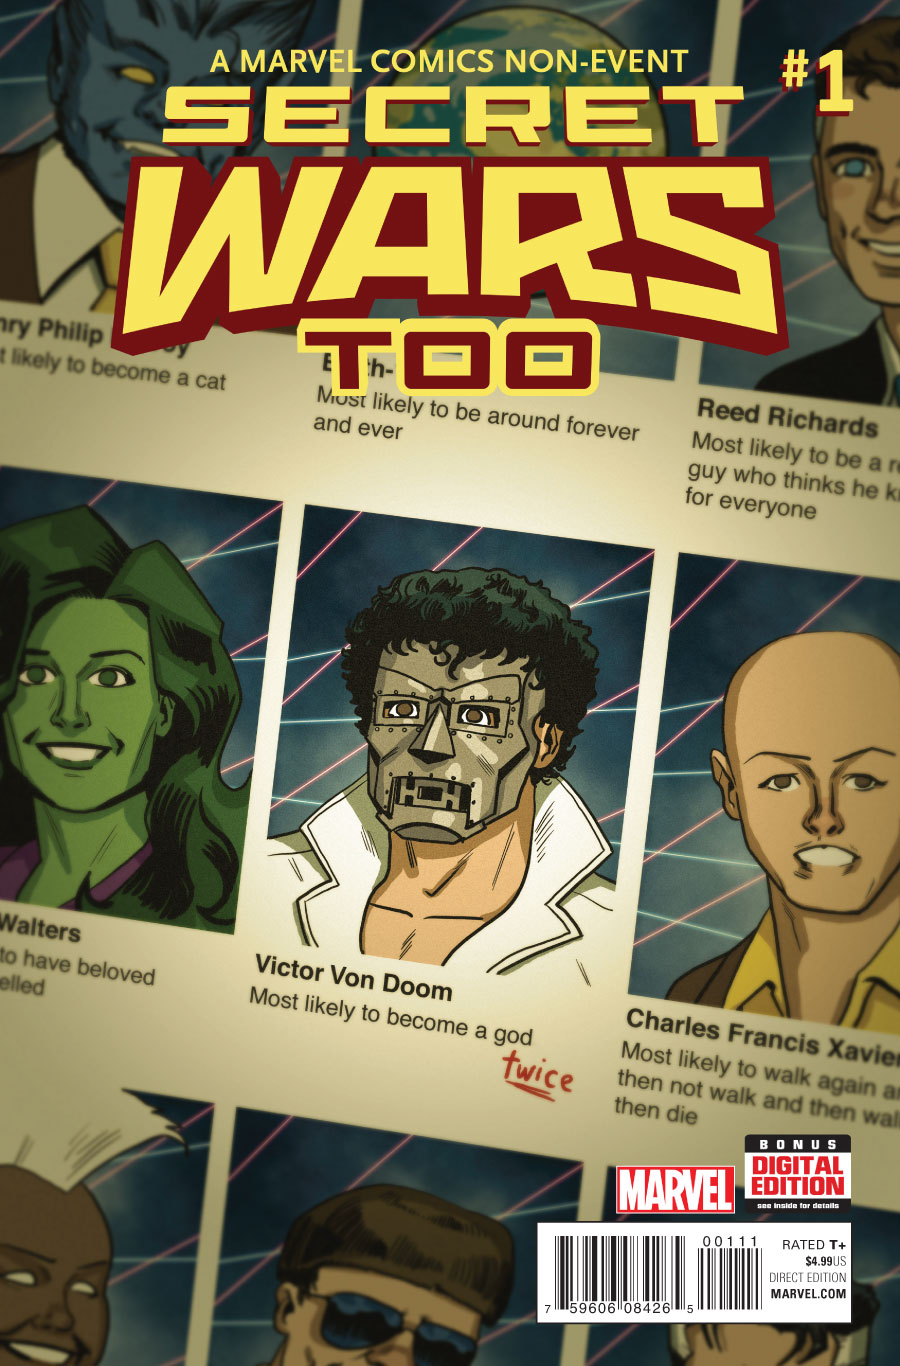 Secret Wars (2015 comic book) - Wikipedia